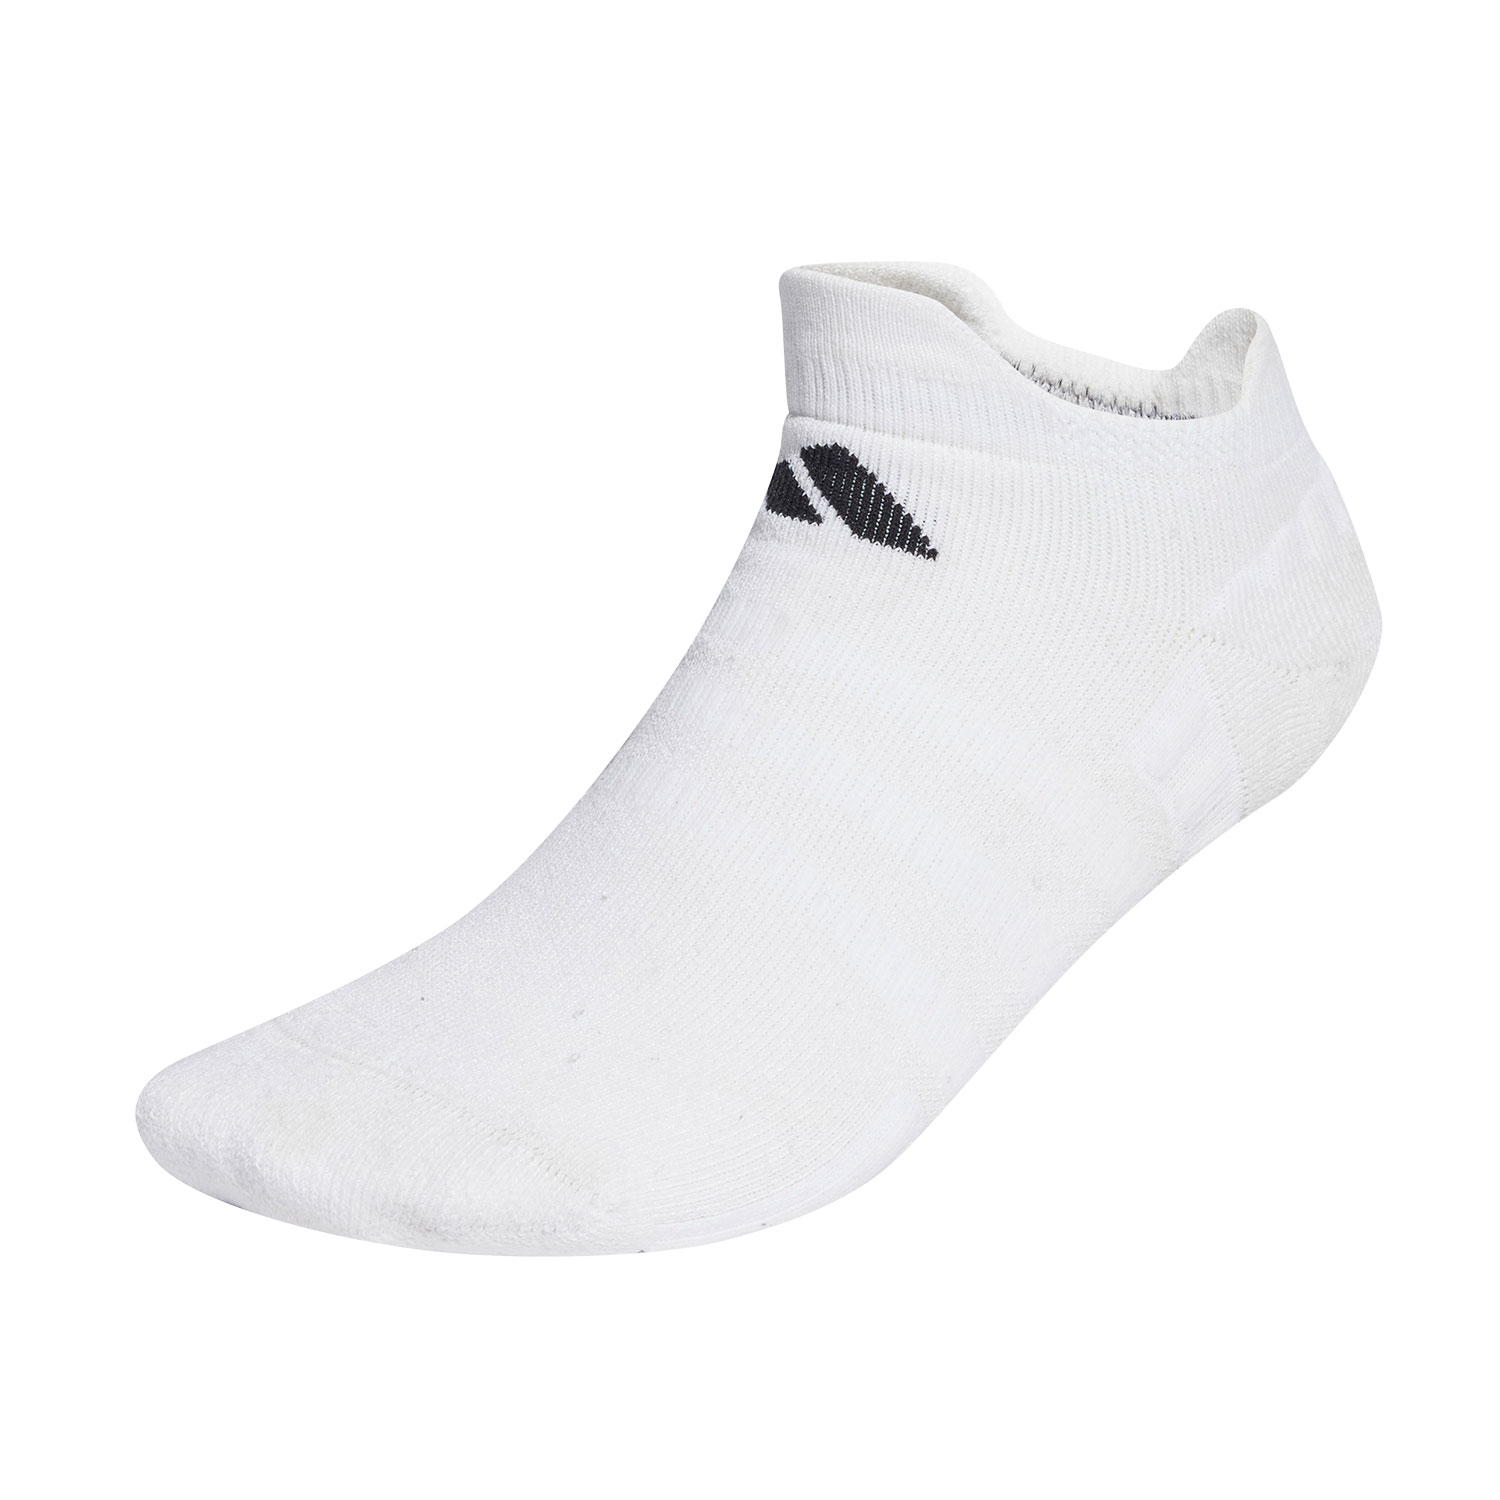 adidas Performance Socks - White/Black